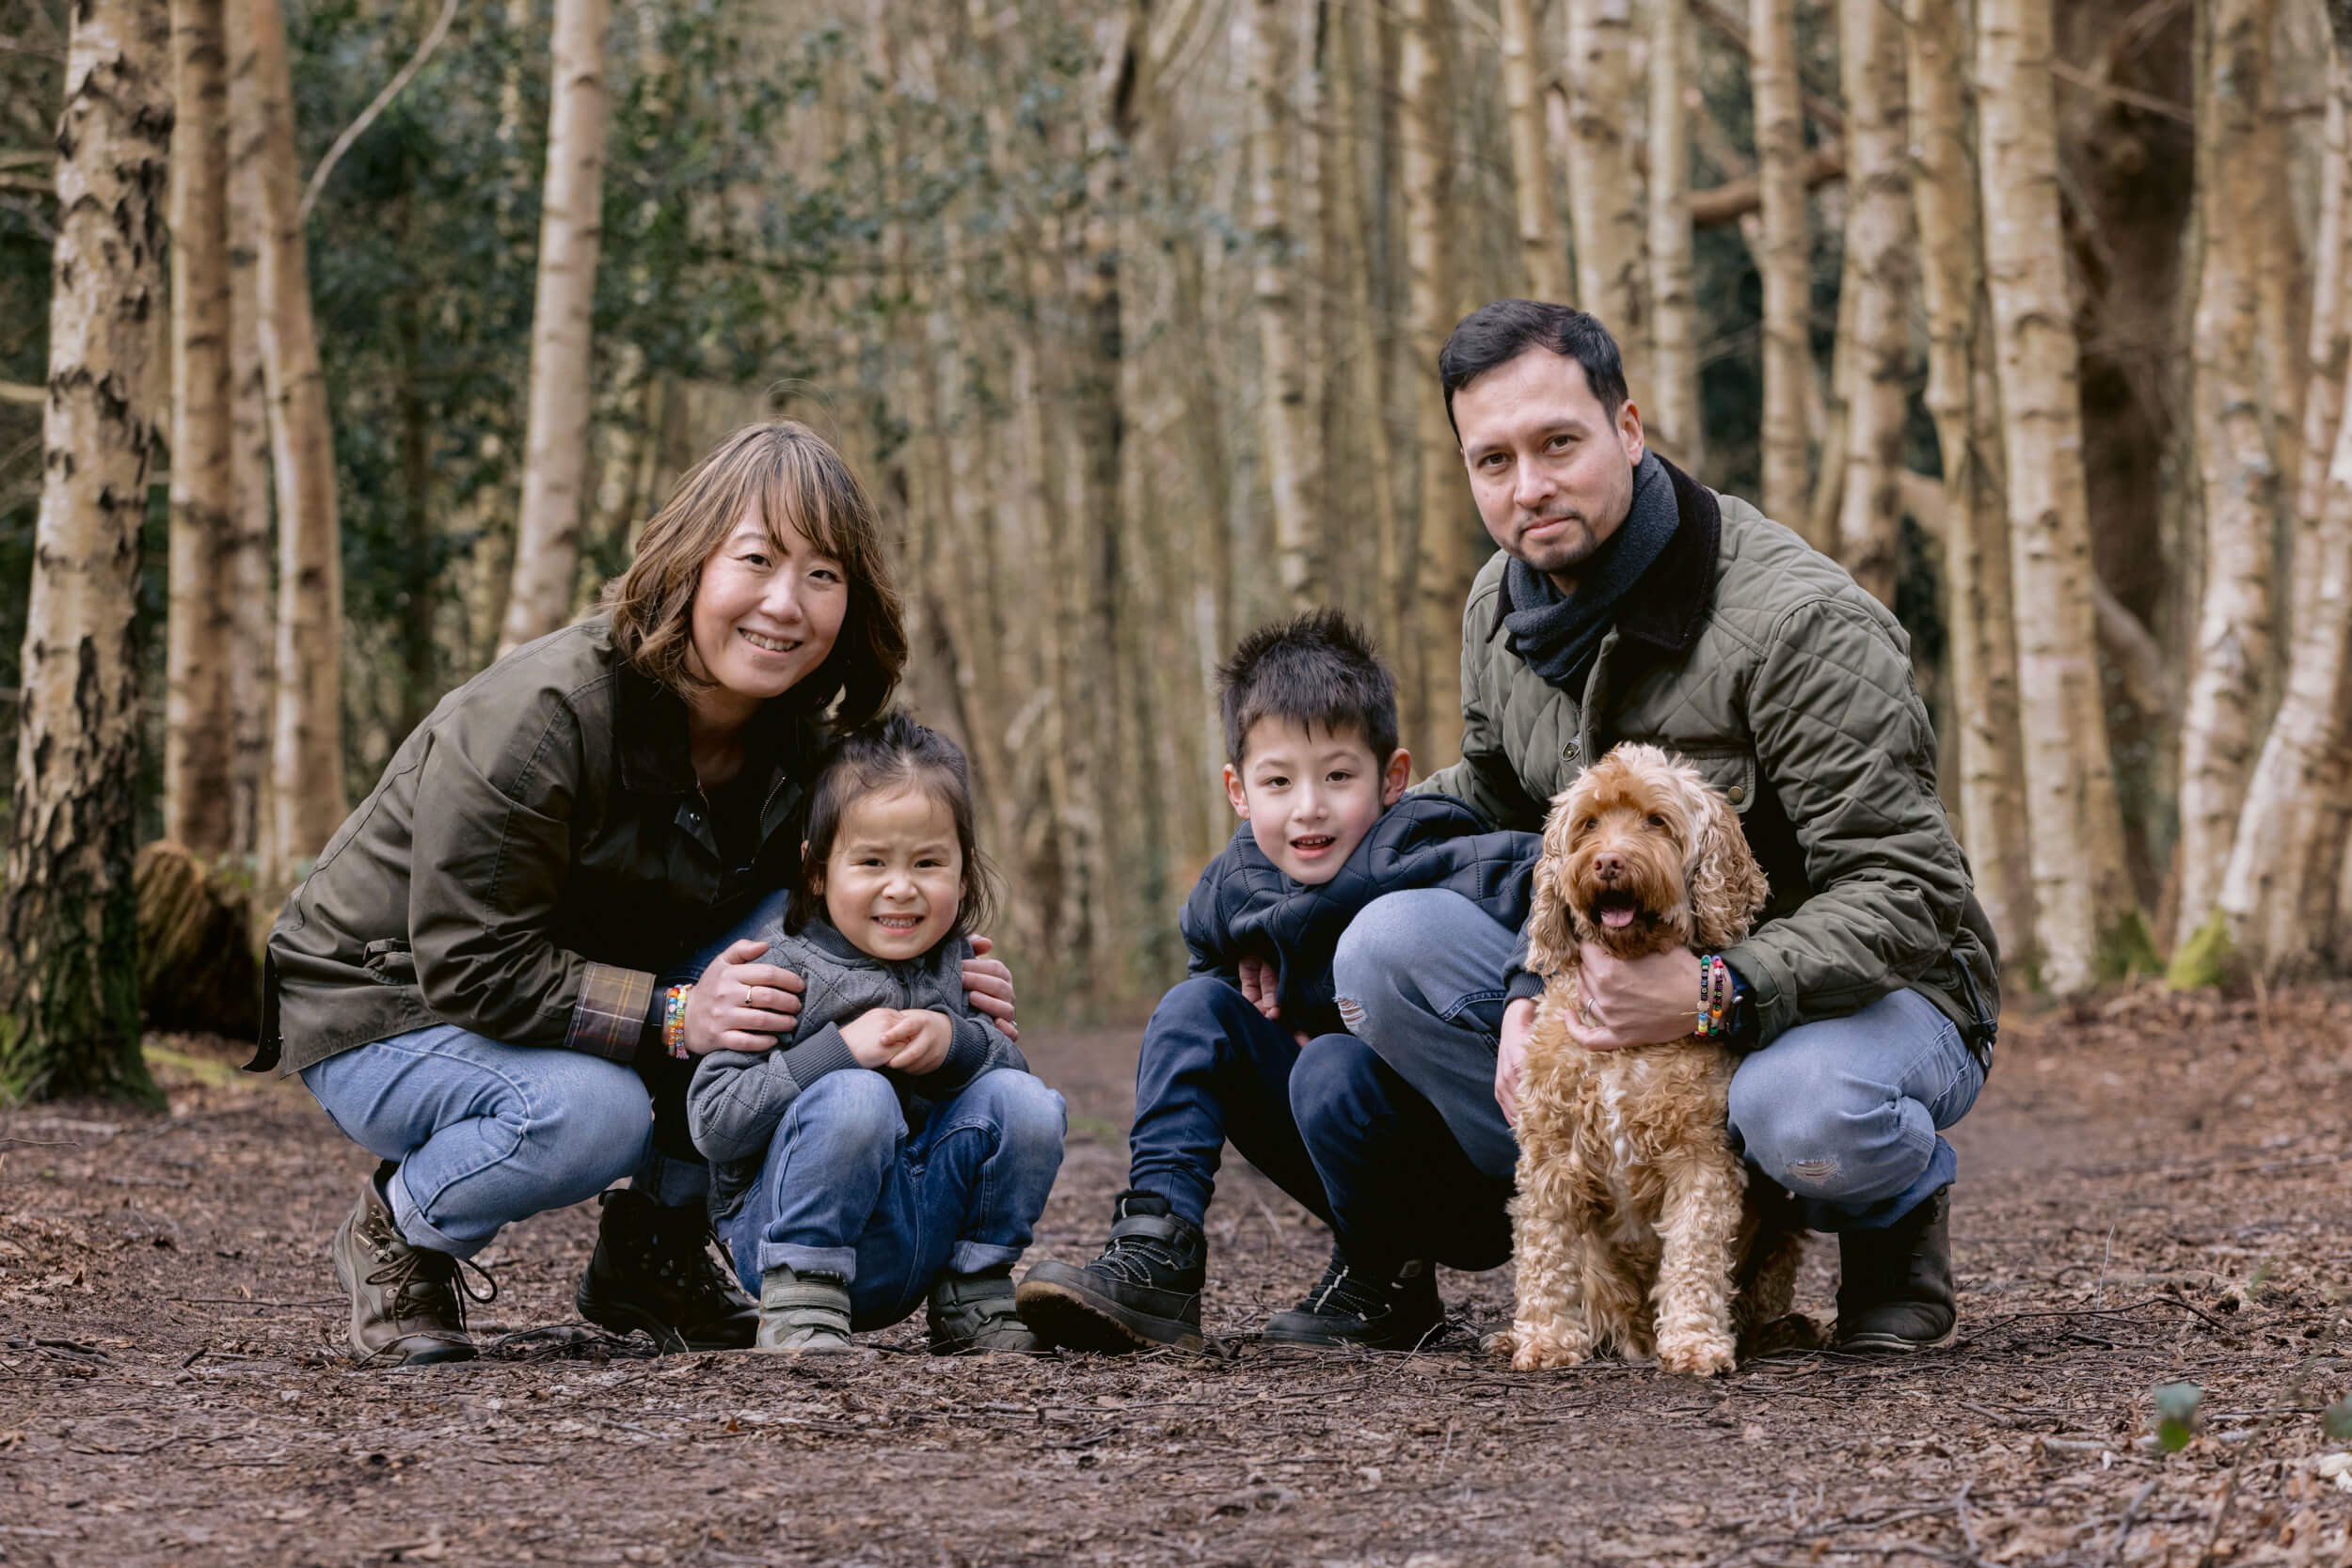 Mina Milanovic Photography | Family and Dog Photography | Family Photoshoot with Dog.jpg